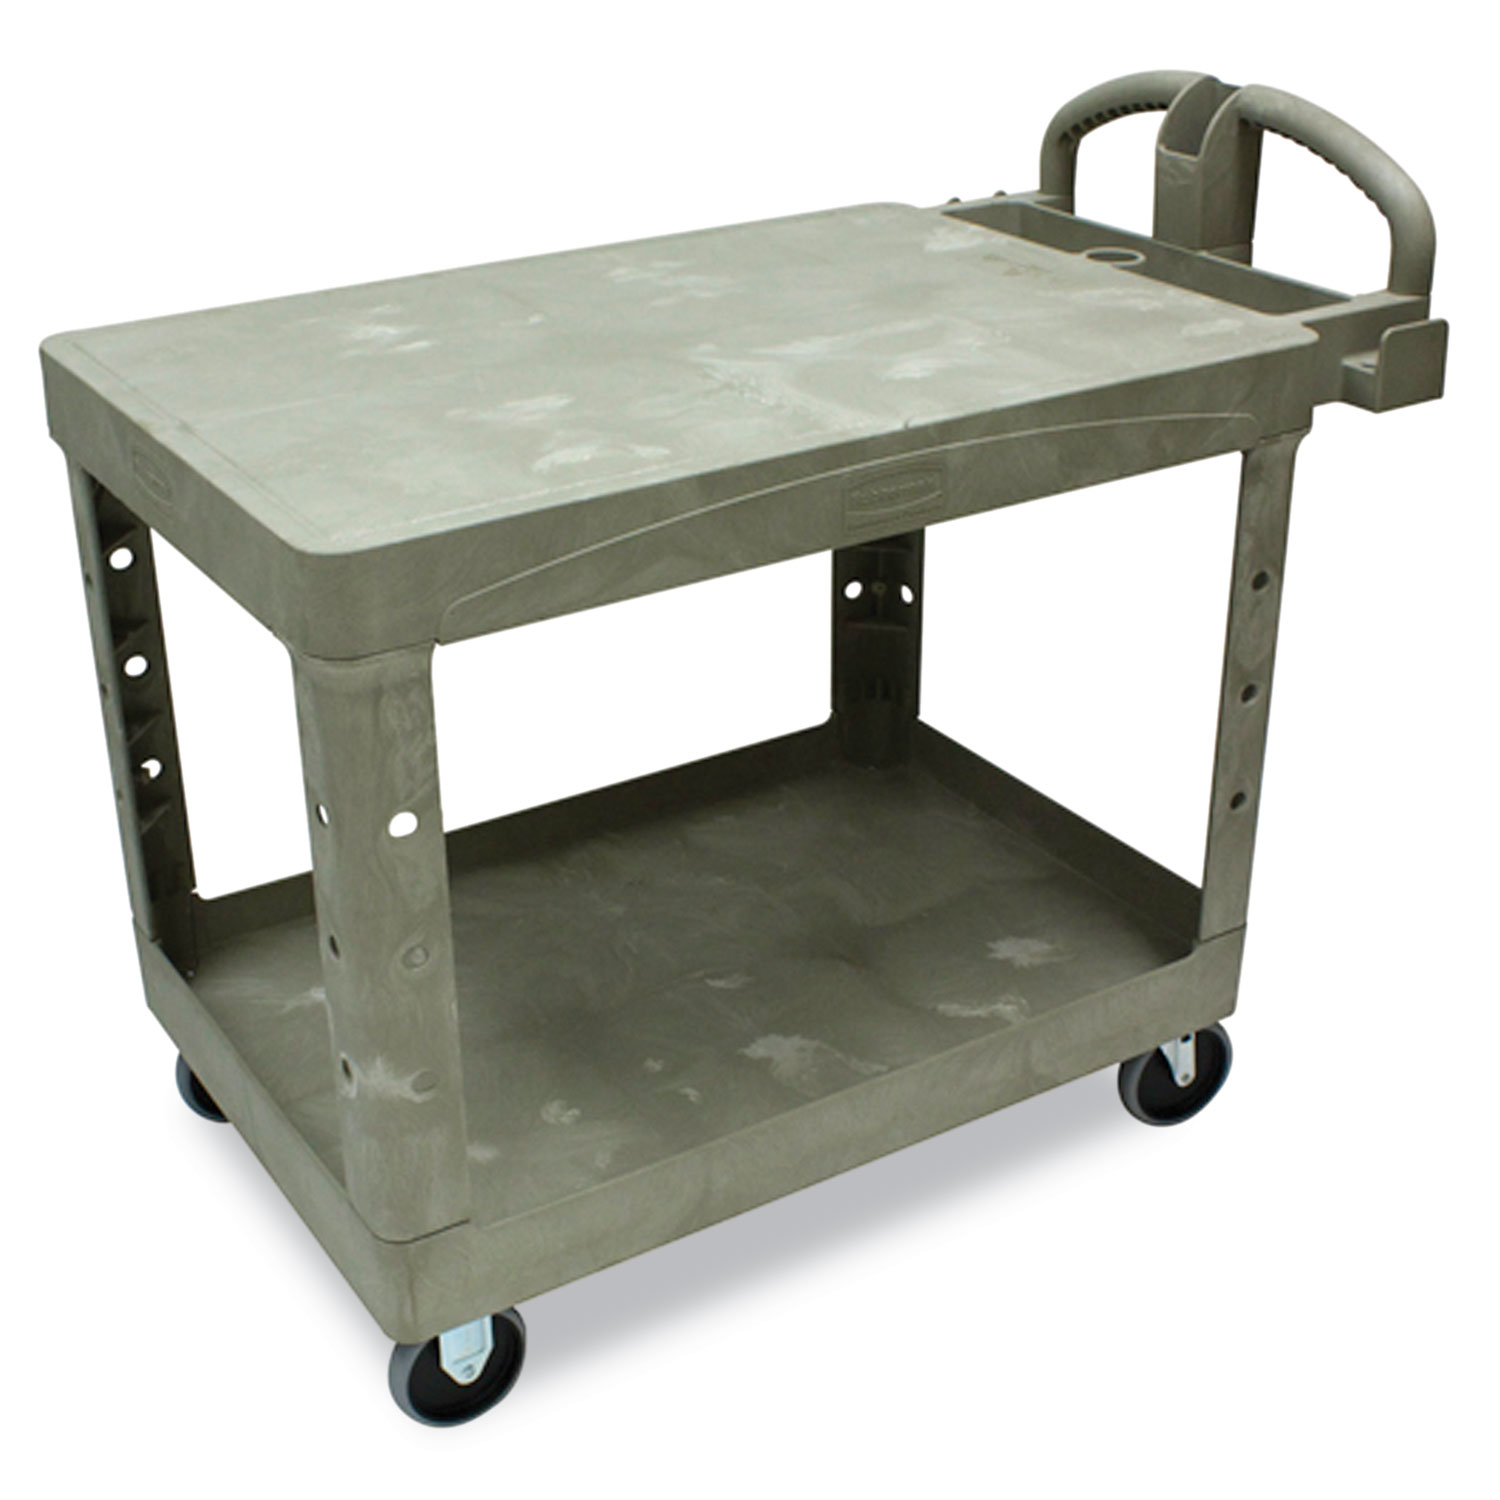  Rubbermaid Commercial FG452500BEIG Flat Shelf Utility Cart, Two-Shelf, 25.25w x 44d x 38.13h, Beige (RCP452500BG) 